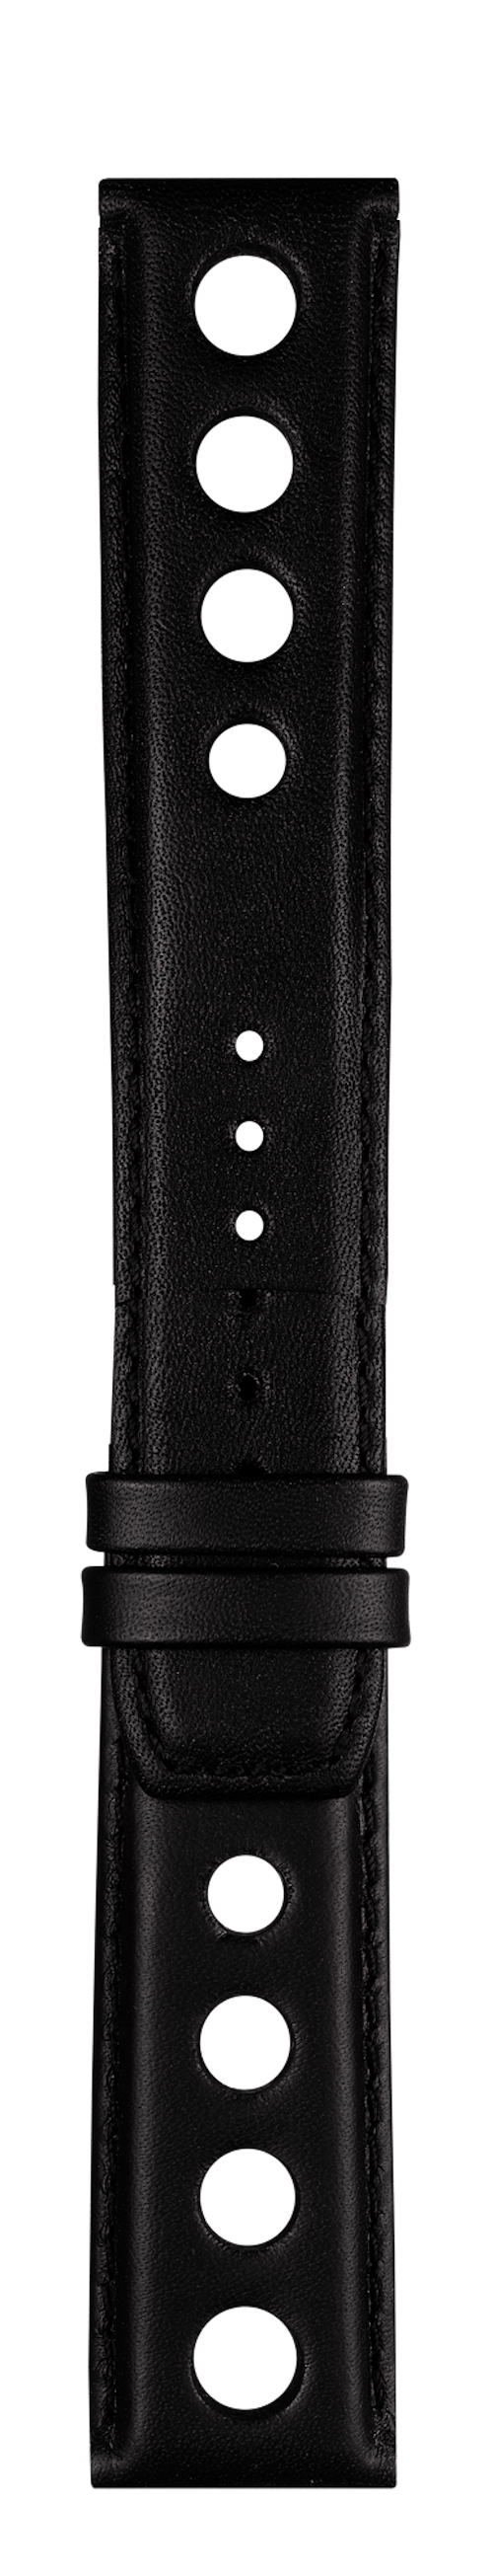 Tissot Strap PRS516 20mm (Longer Size) Black Leather Band - WATCHBAND EXPERT